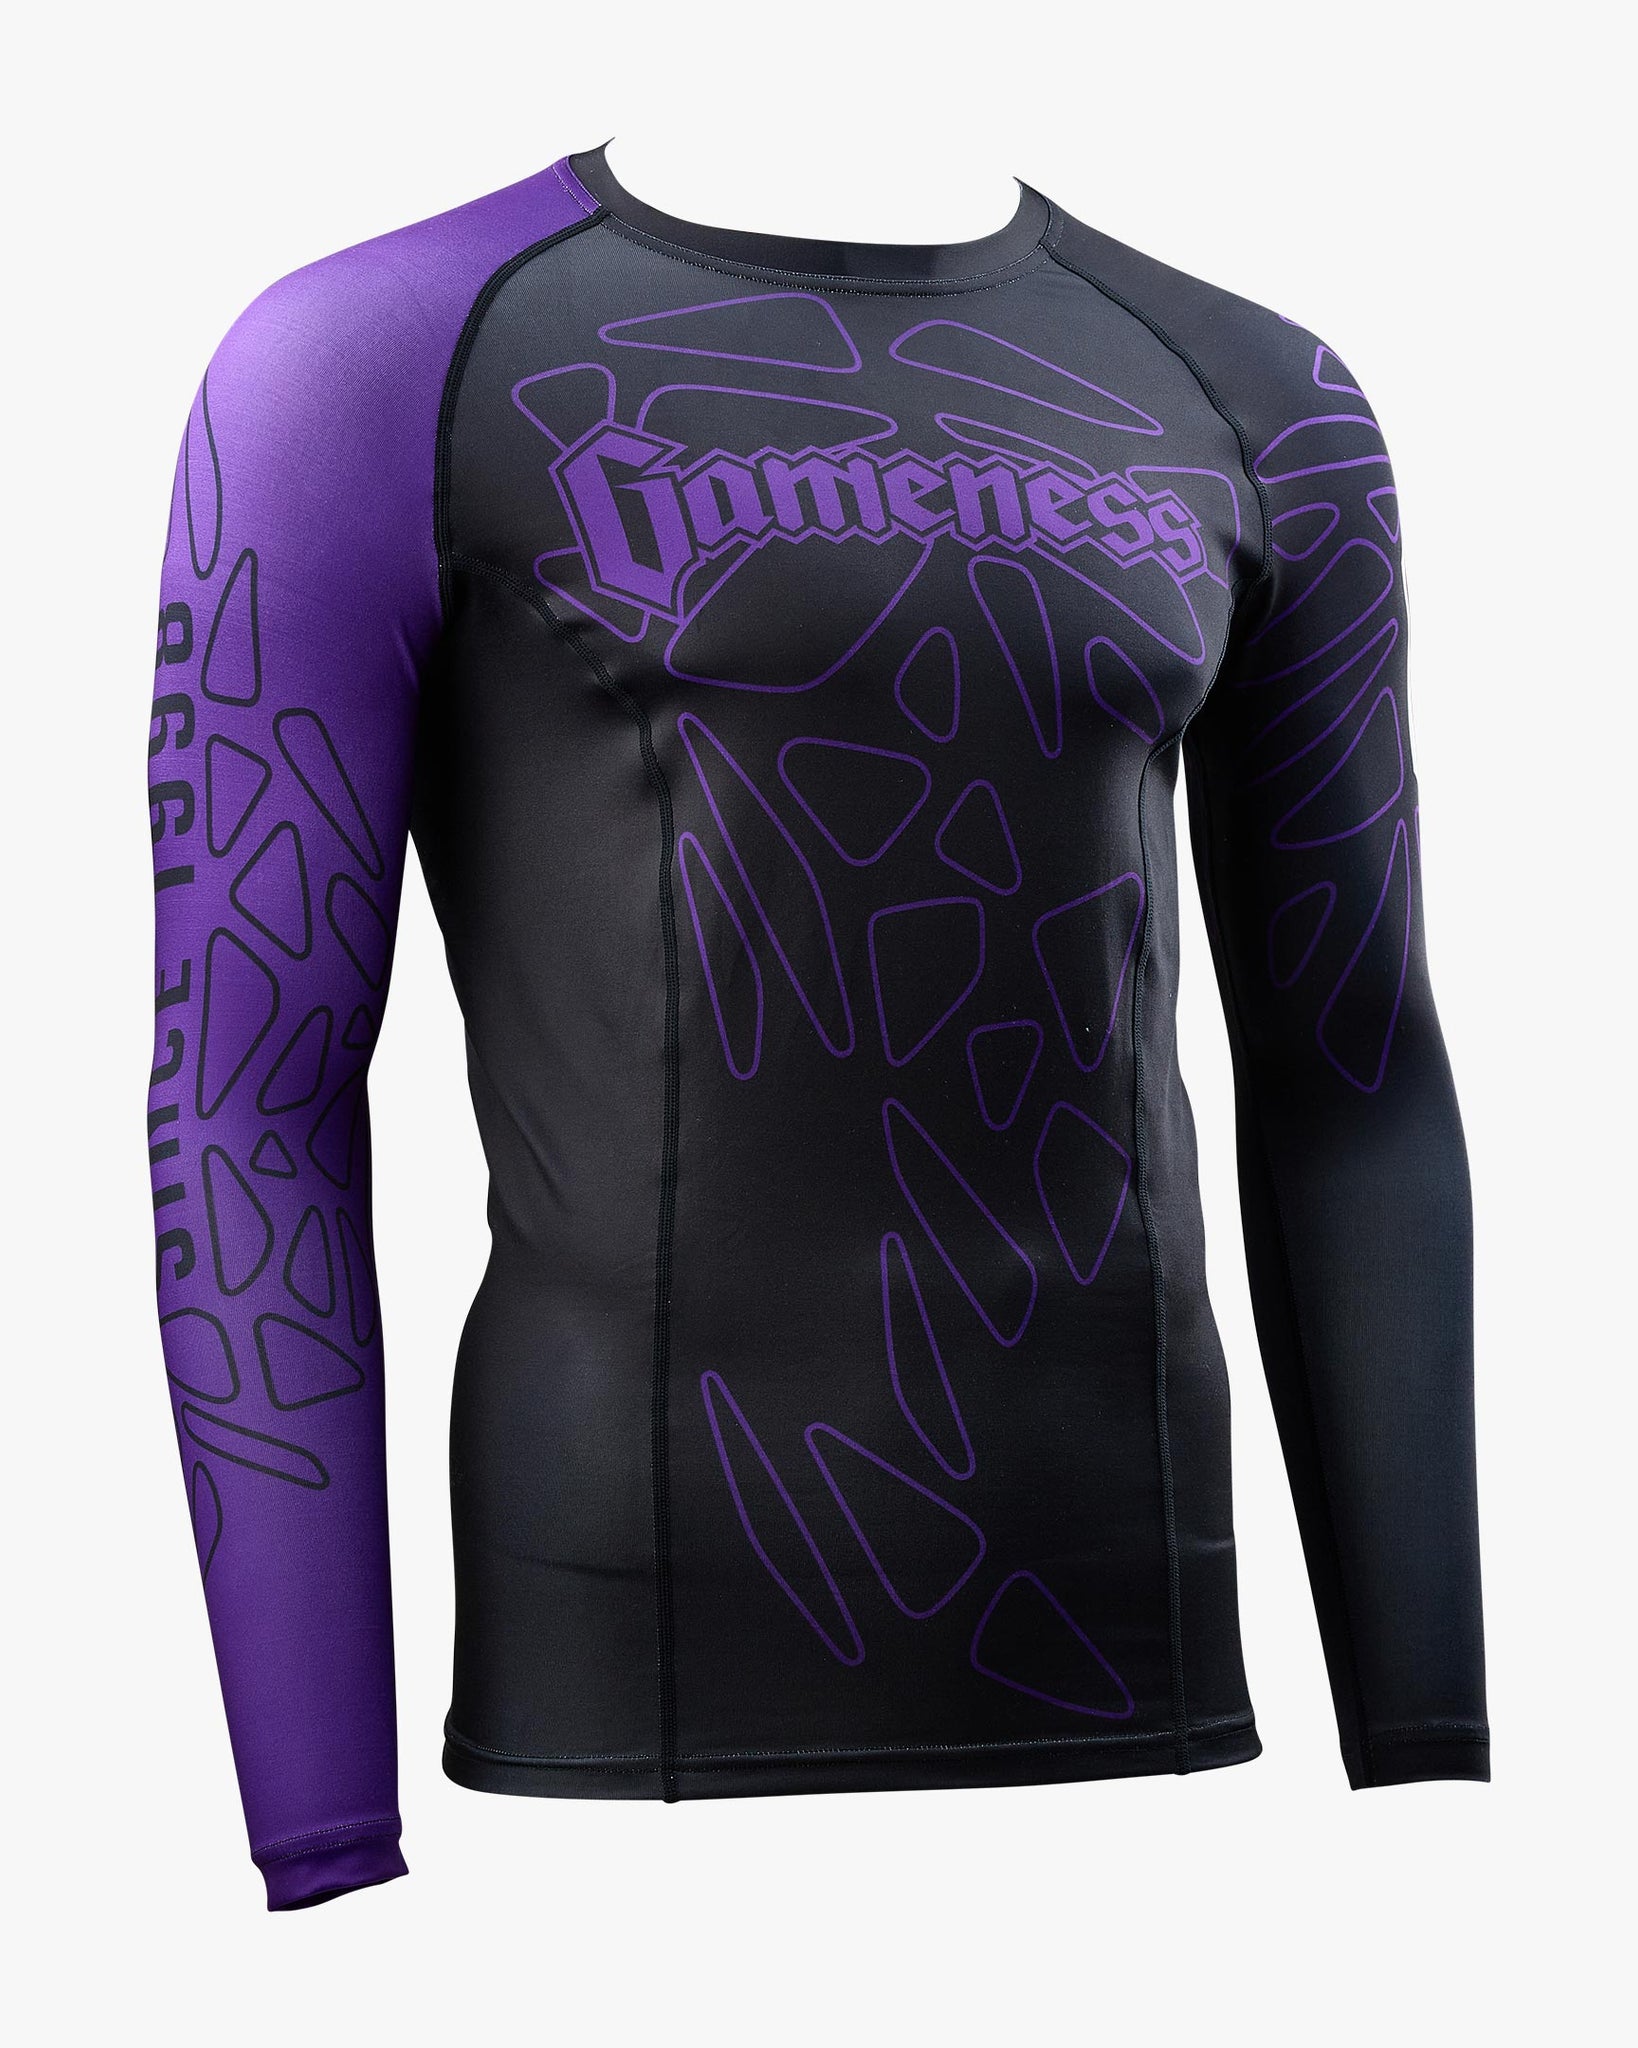 Gameness Men's Long Sleeve Pro Ranked Rash Guard Purple